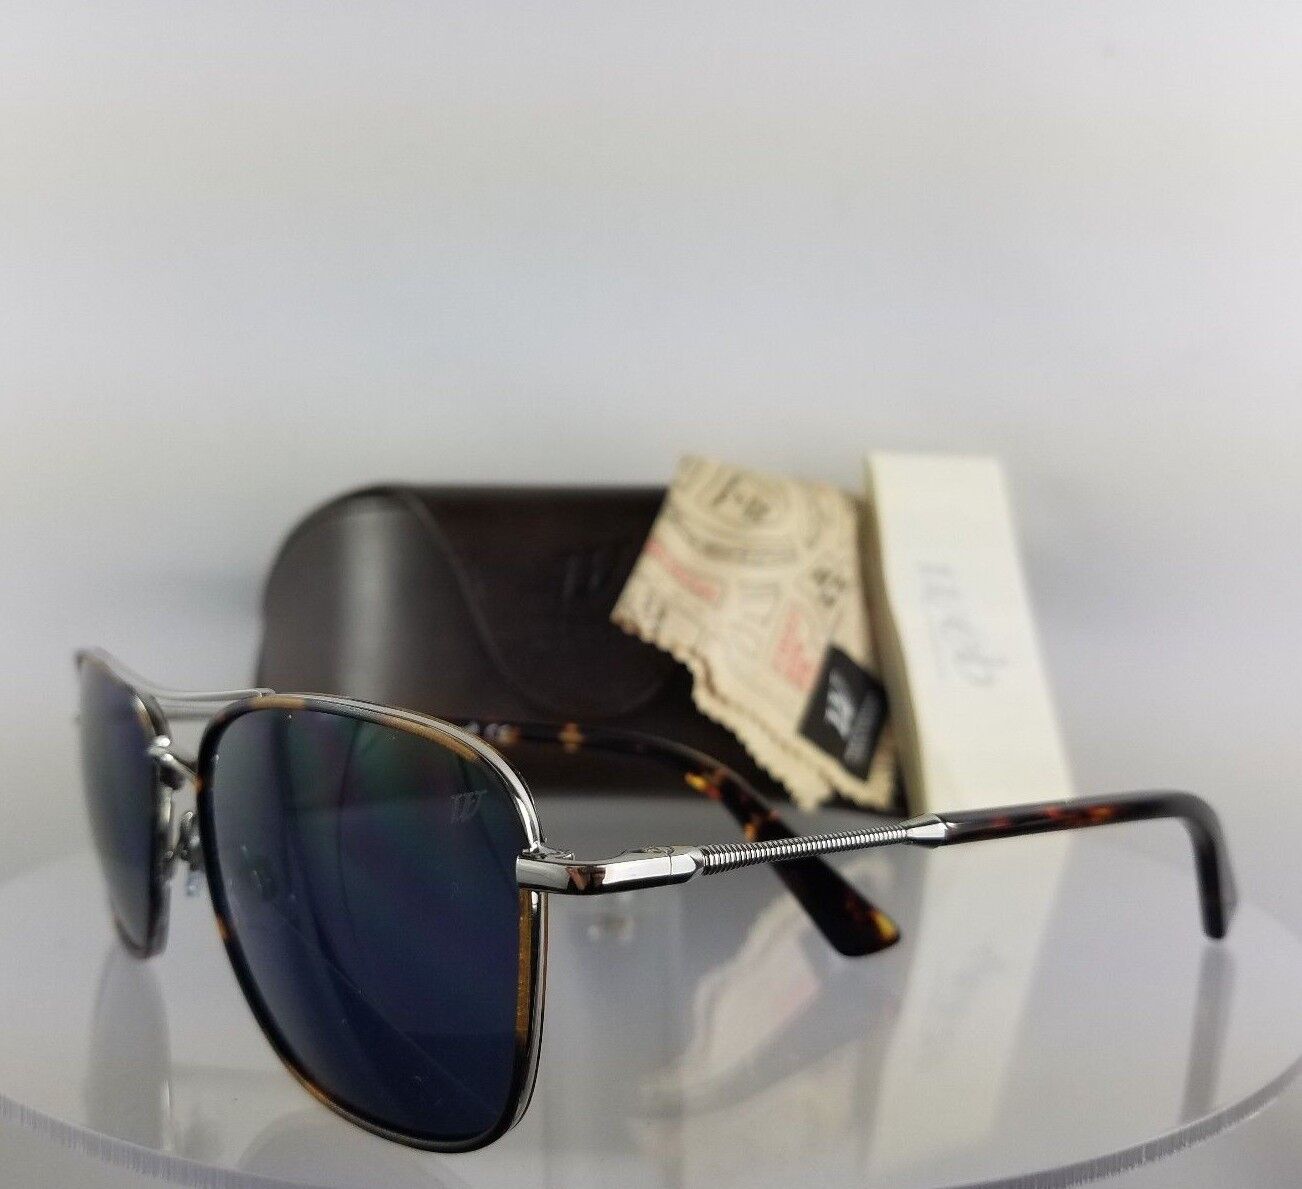 Brand New Authentic Web Sunglasses WE 0163 Col. 16V Tortoise/Silver 56mm Frame